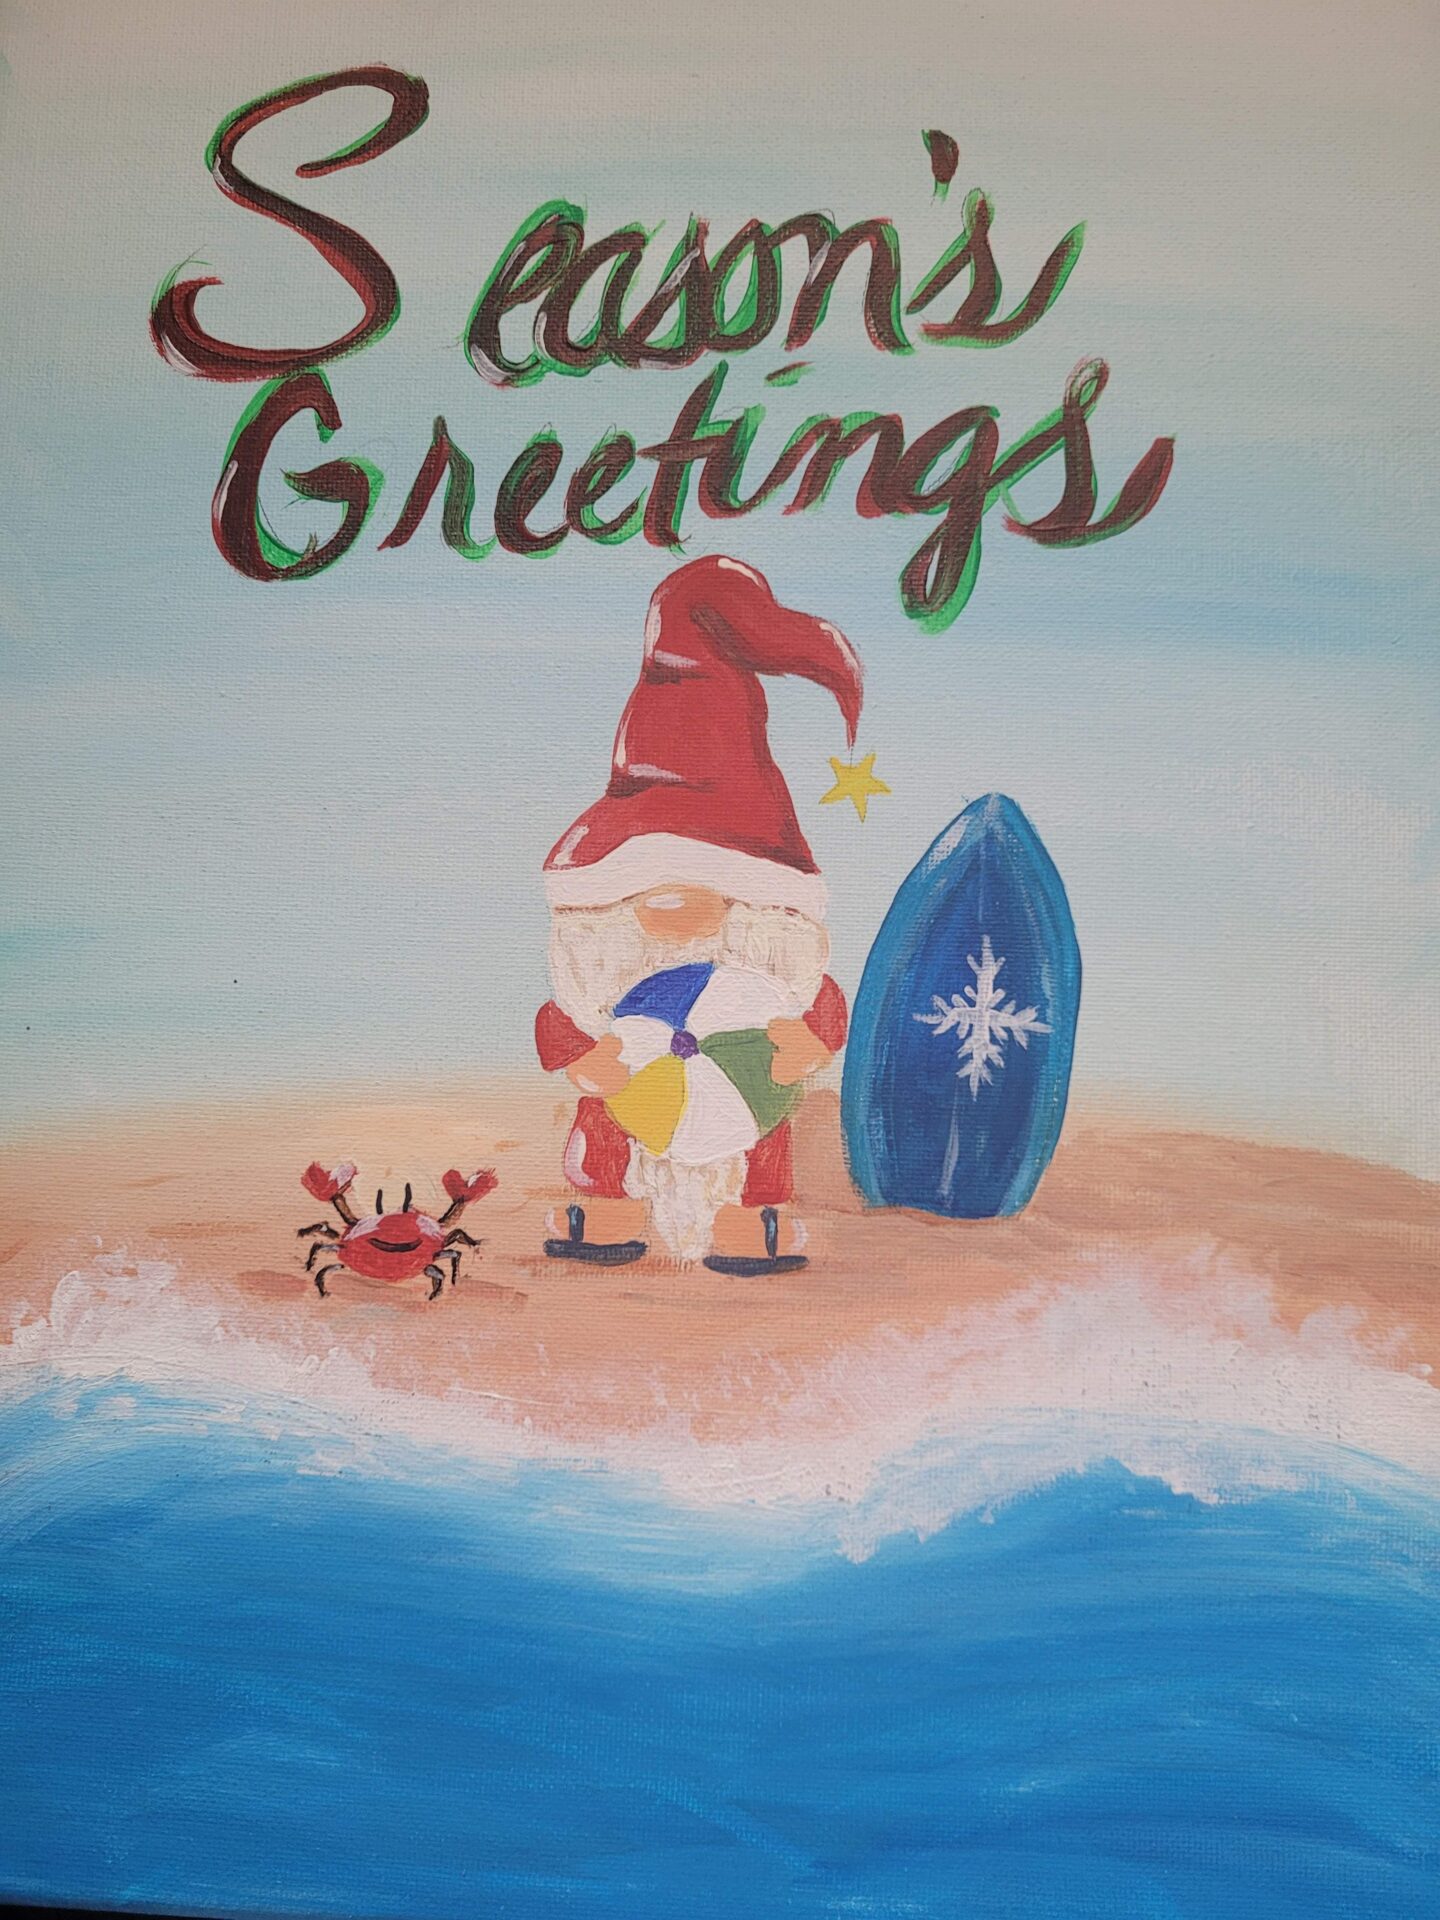 A Christmas Seasonal Greetings Greeting Painting